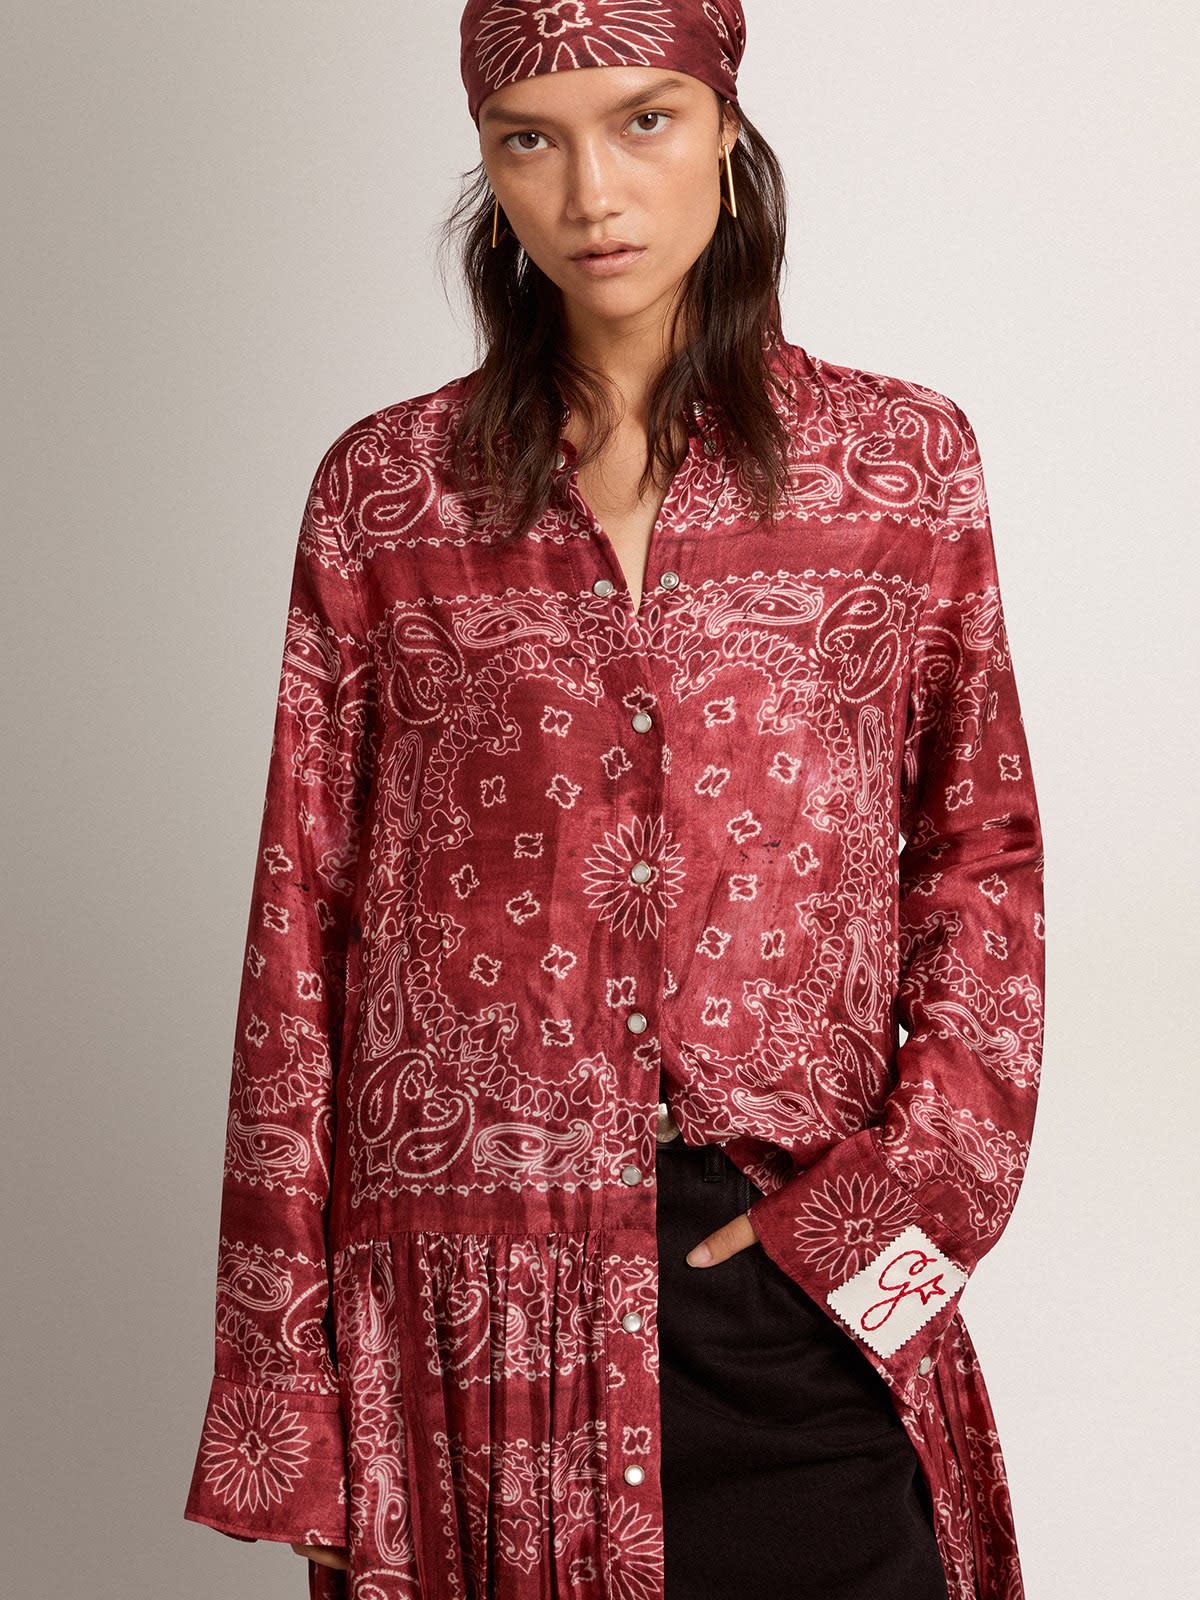 Women's burgundy shirt dress with paisley print - 2